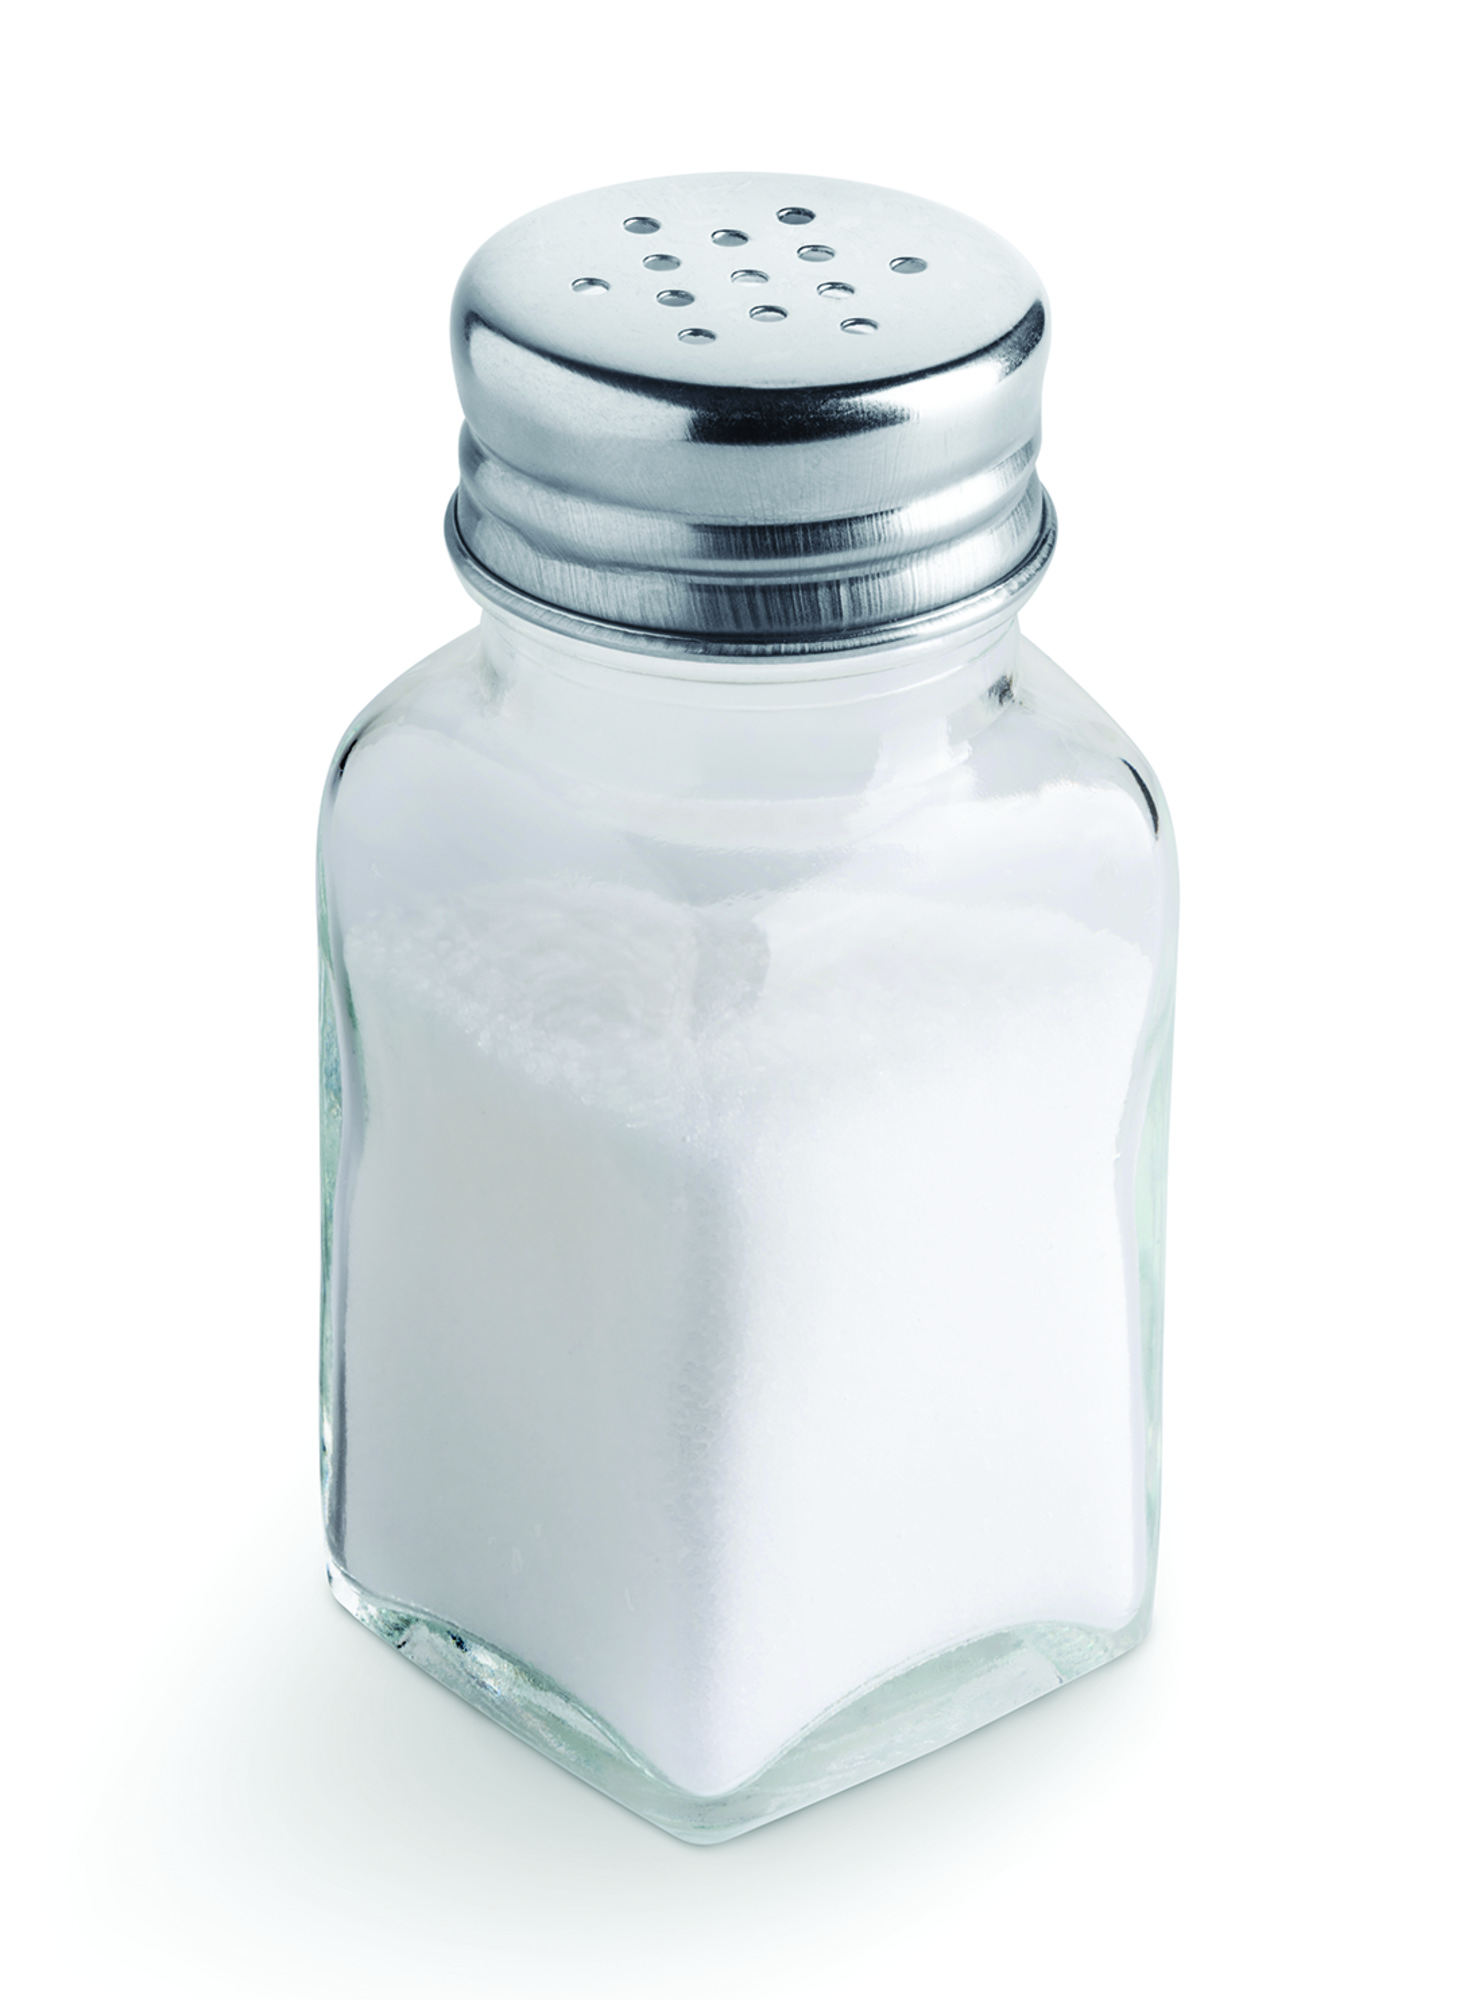 Salt revs up allergy-activating immune cells﻿